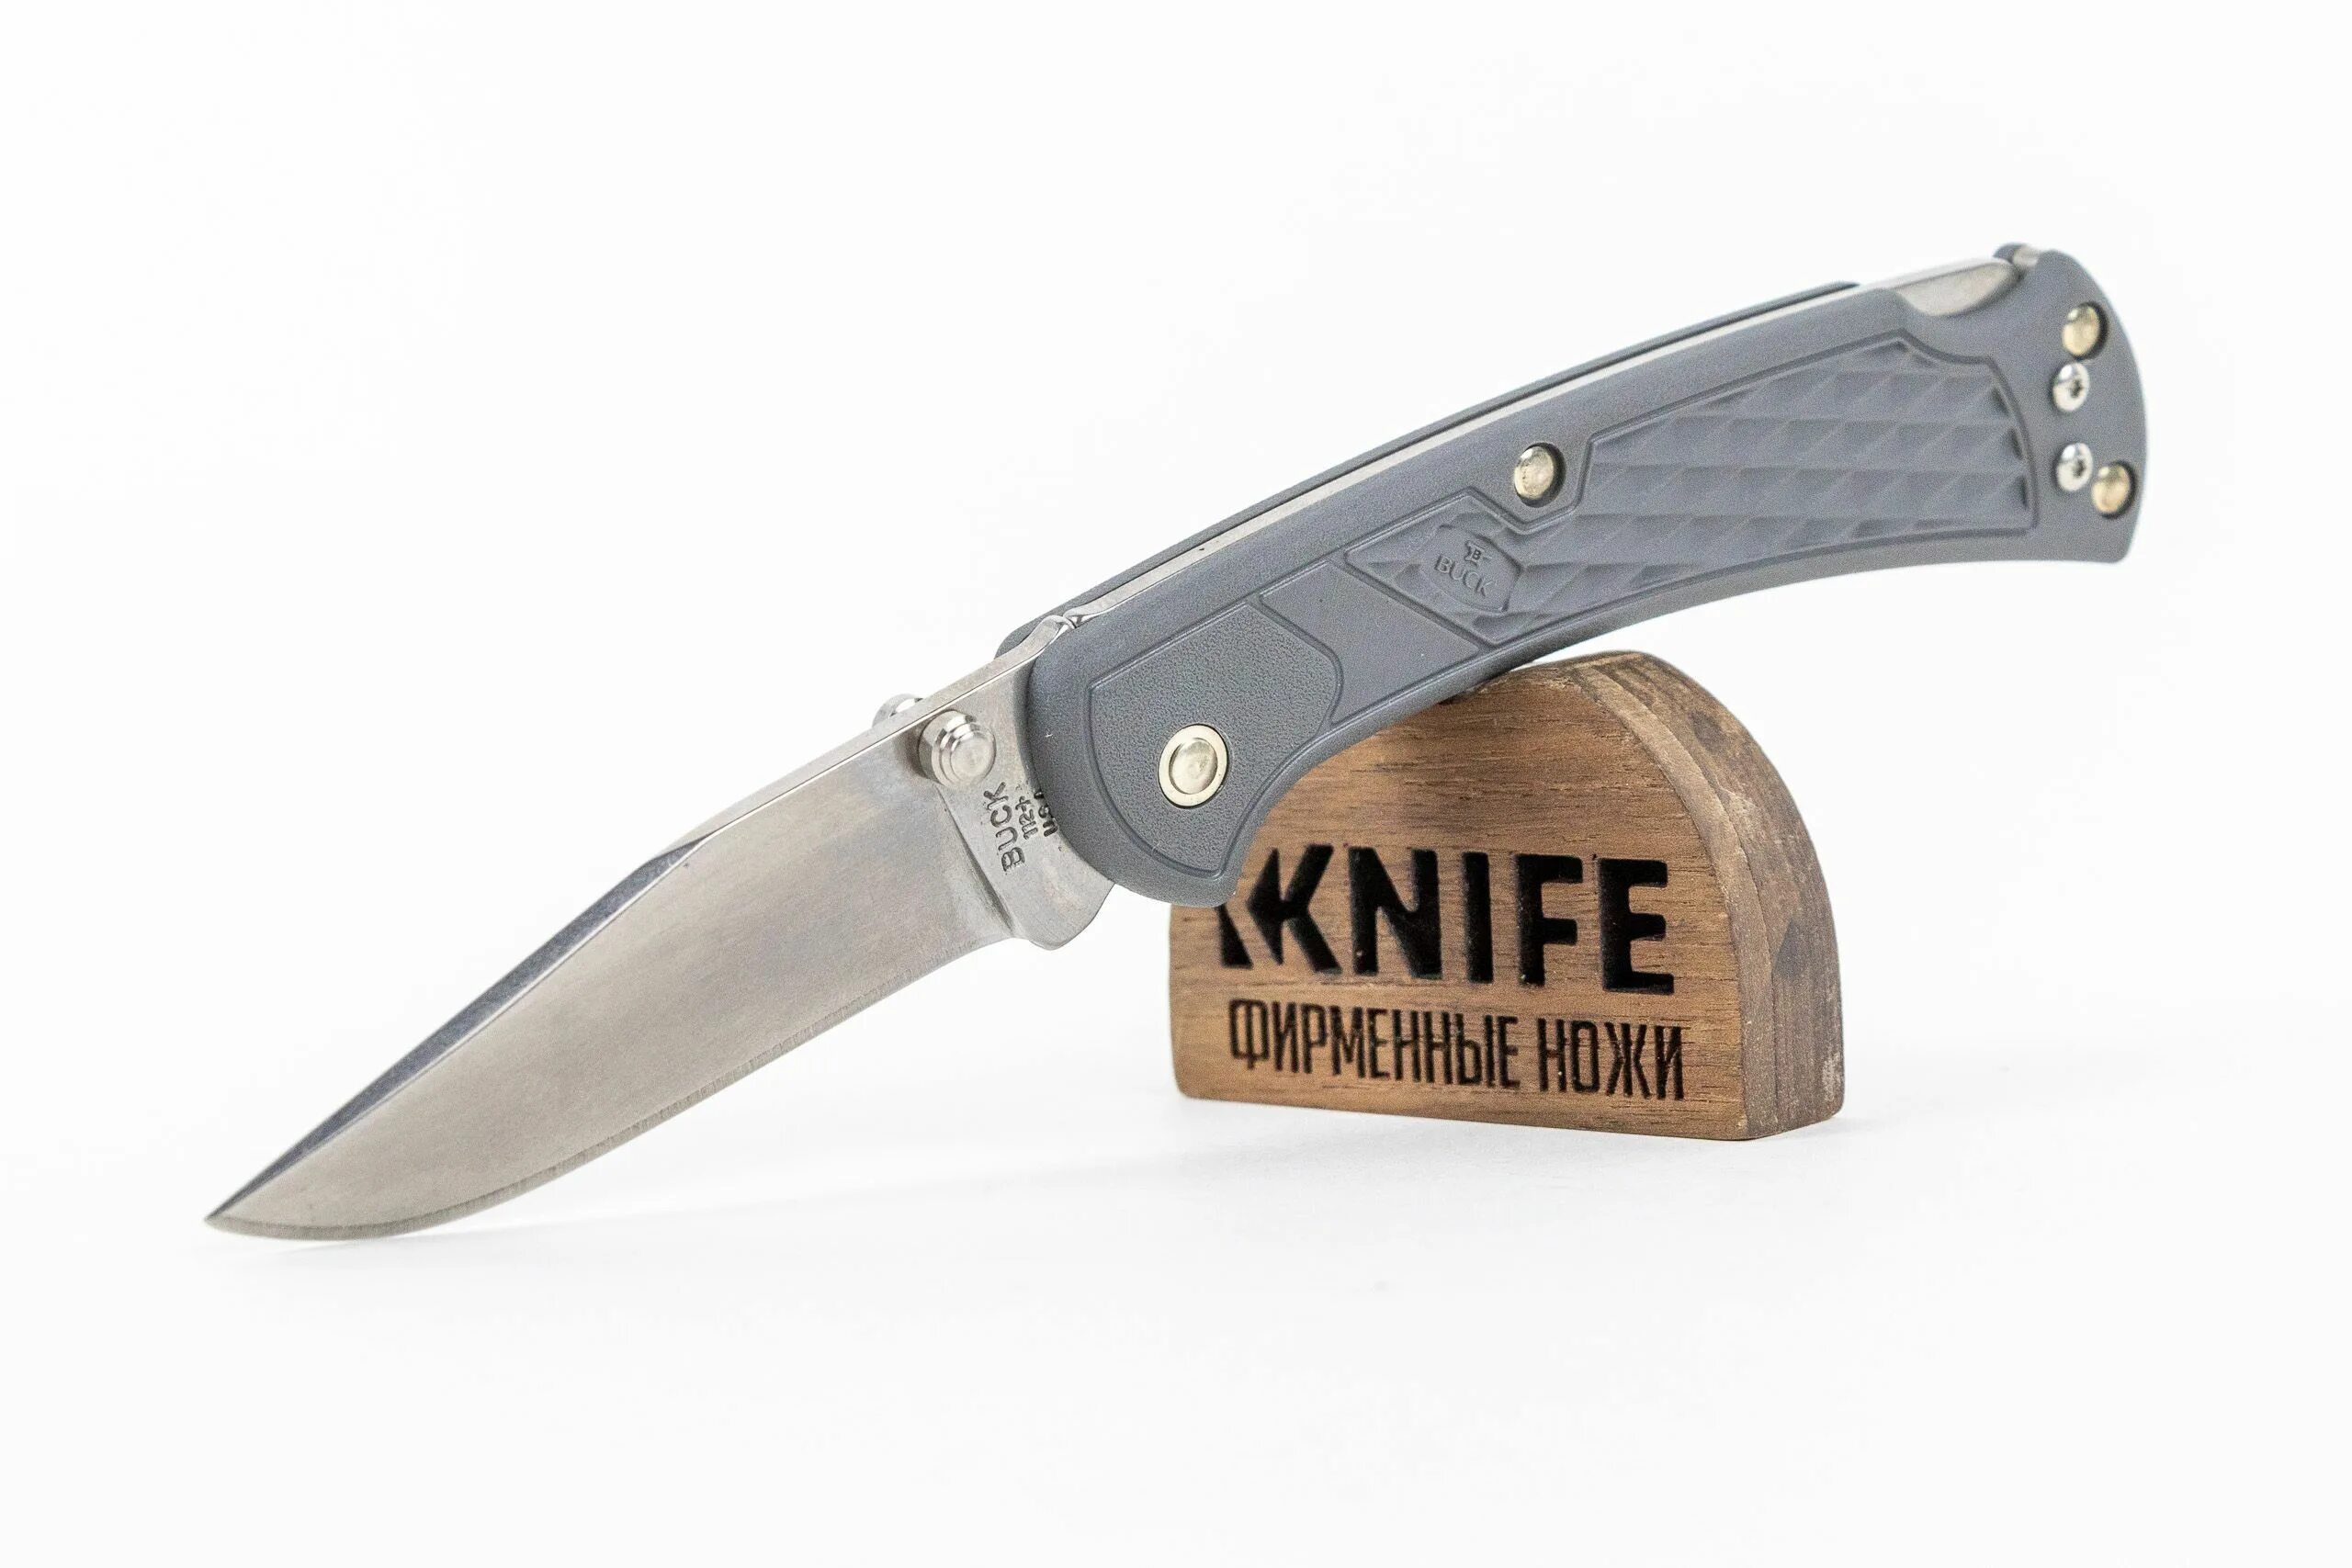 Купить нож отзывы. Нож "112 Ranger Slim select" 420нс nylon 0112brs2. Нож 112-28. Slim Ranger. Sterling ножи отзывы.